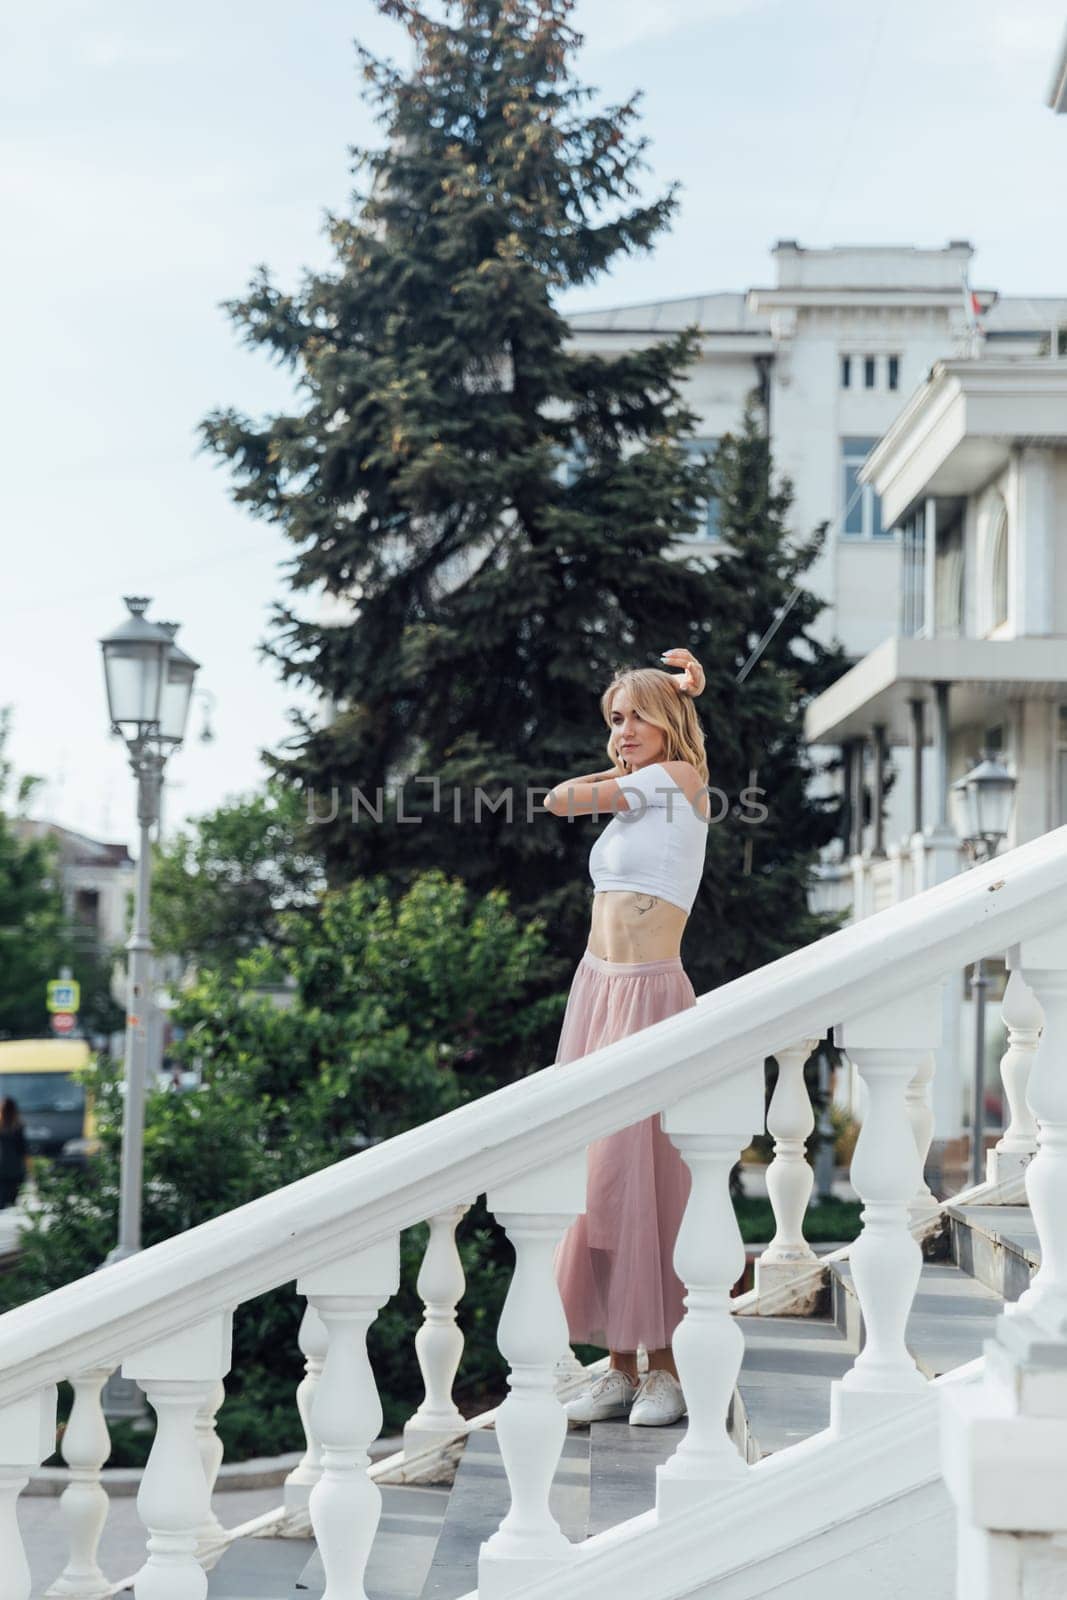 Slender blonde on the street near the railing by Simakov